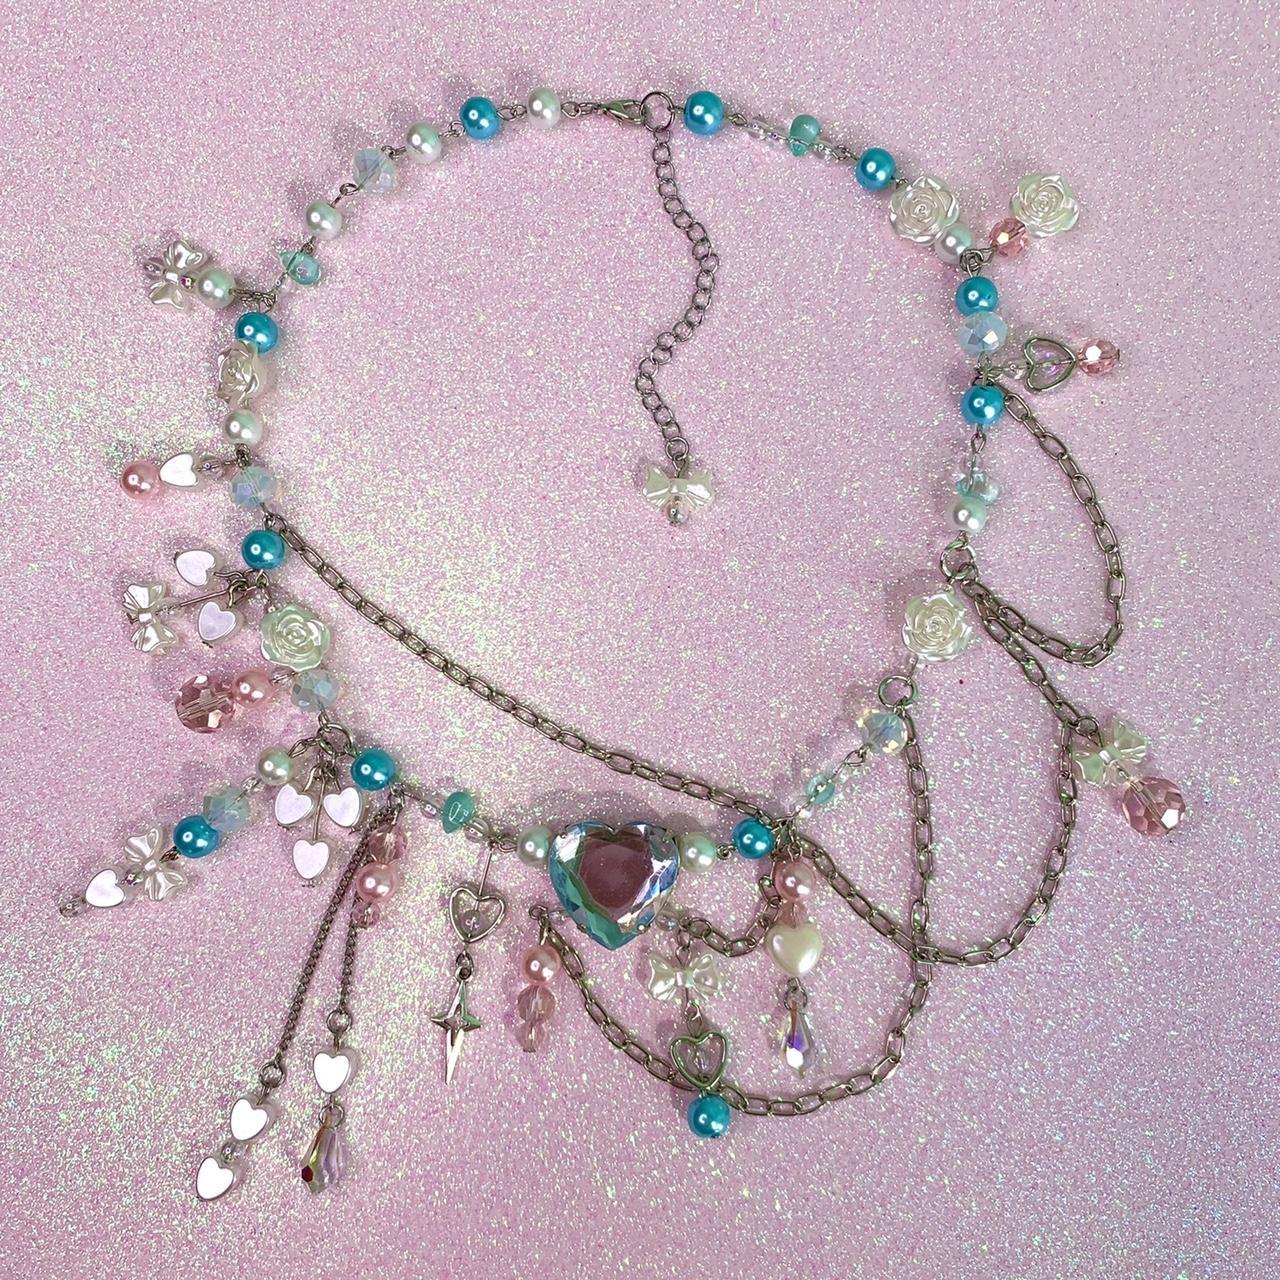 Sugarpill Women's Pink and Blue Jewellery